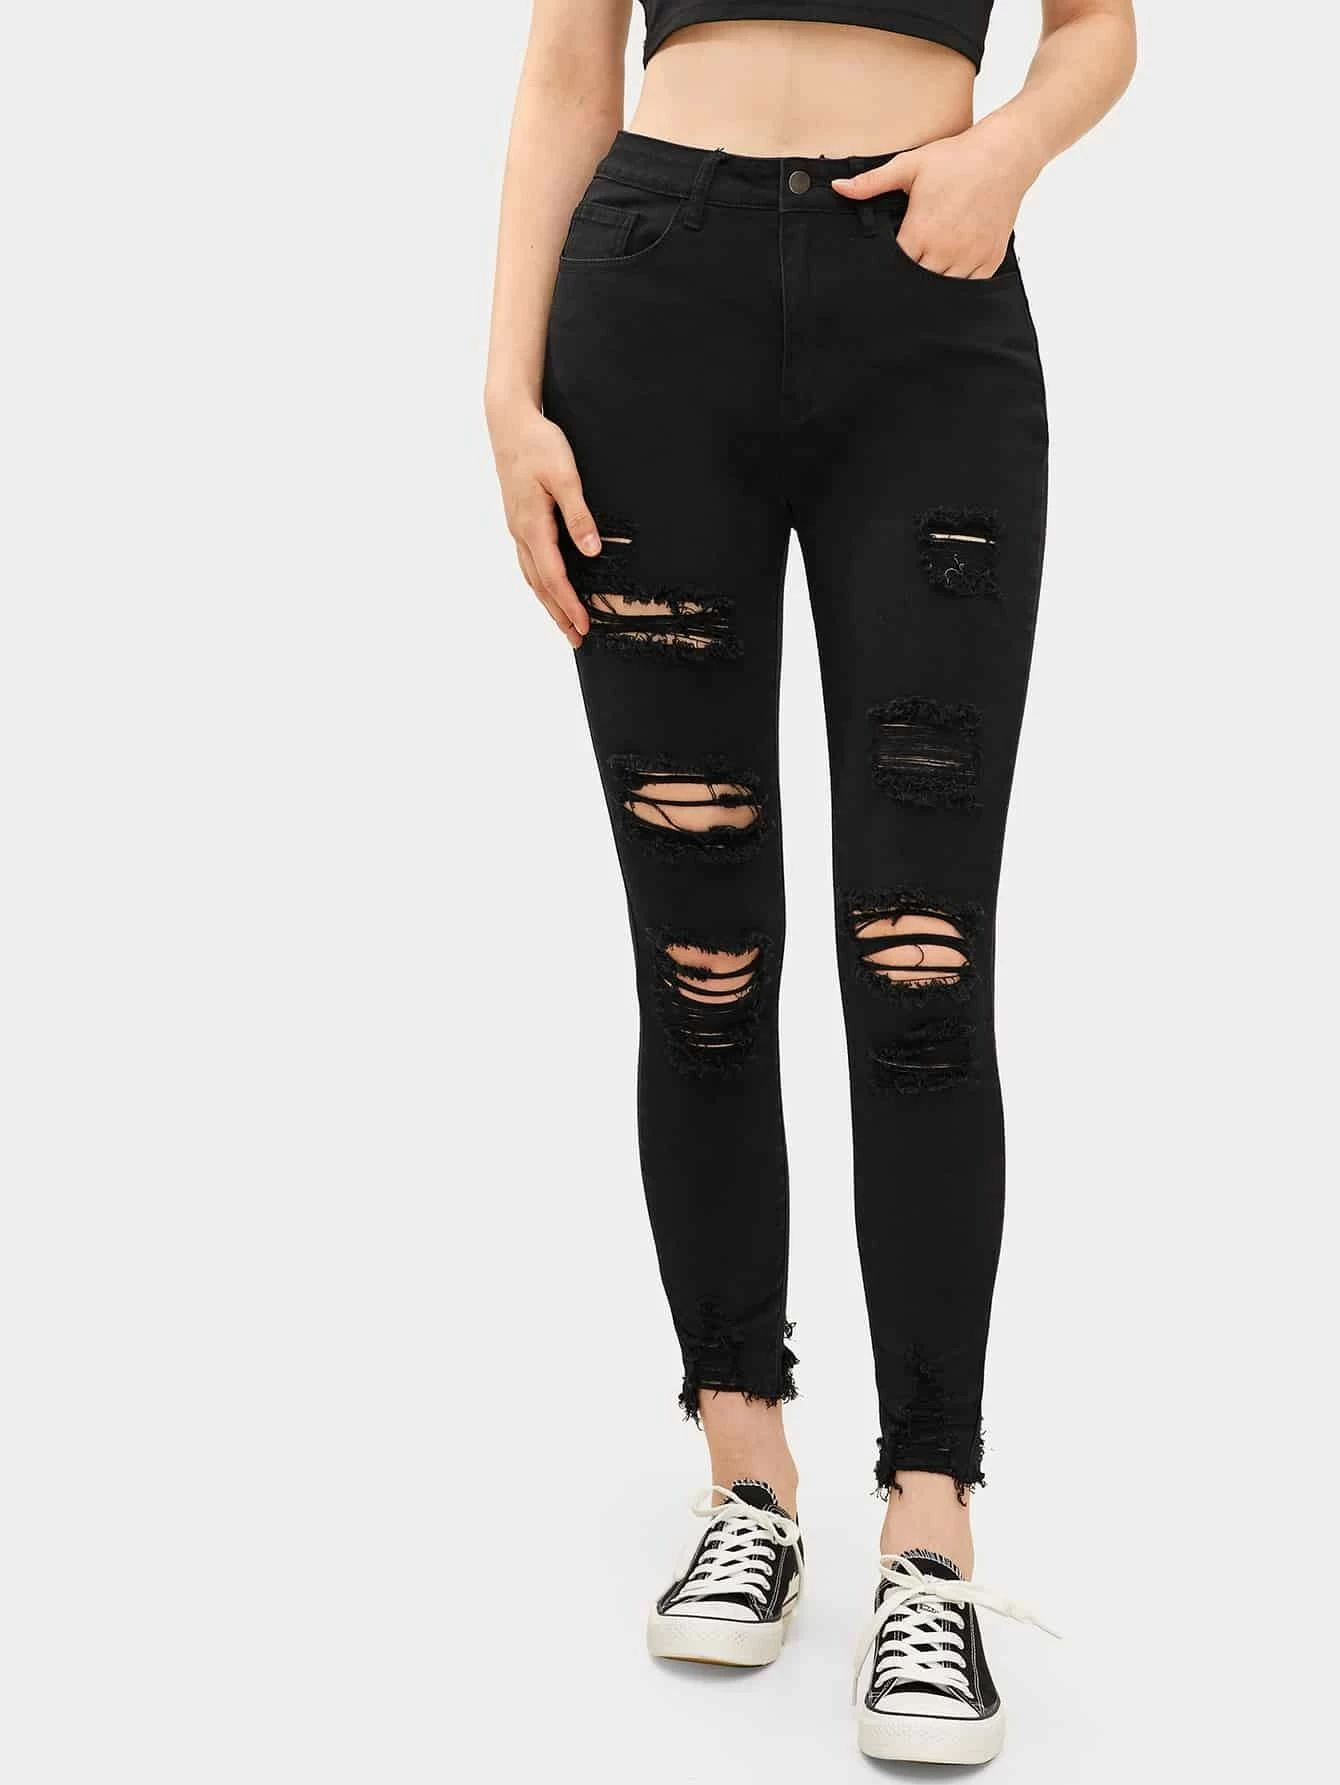 Distressed High-Rise Skinny Jeans
   
    SKU: rwpants01190723767
         
        1372 Reviews
... | ROMWE